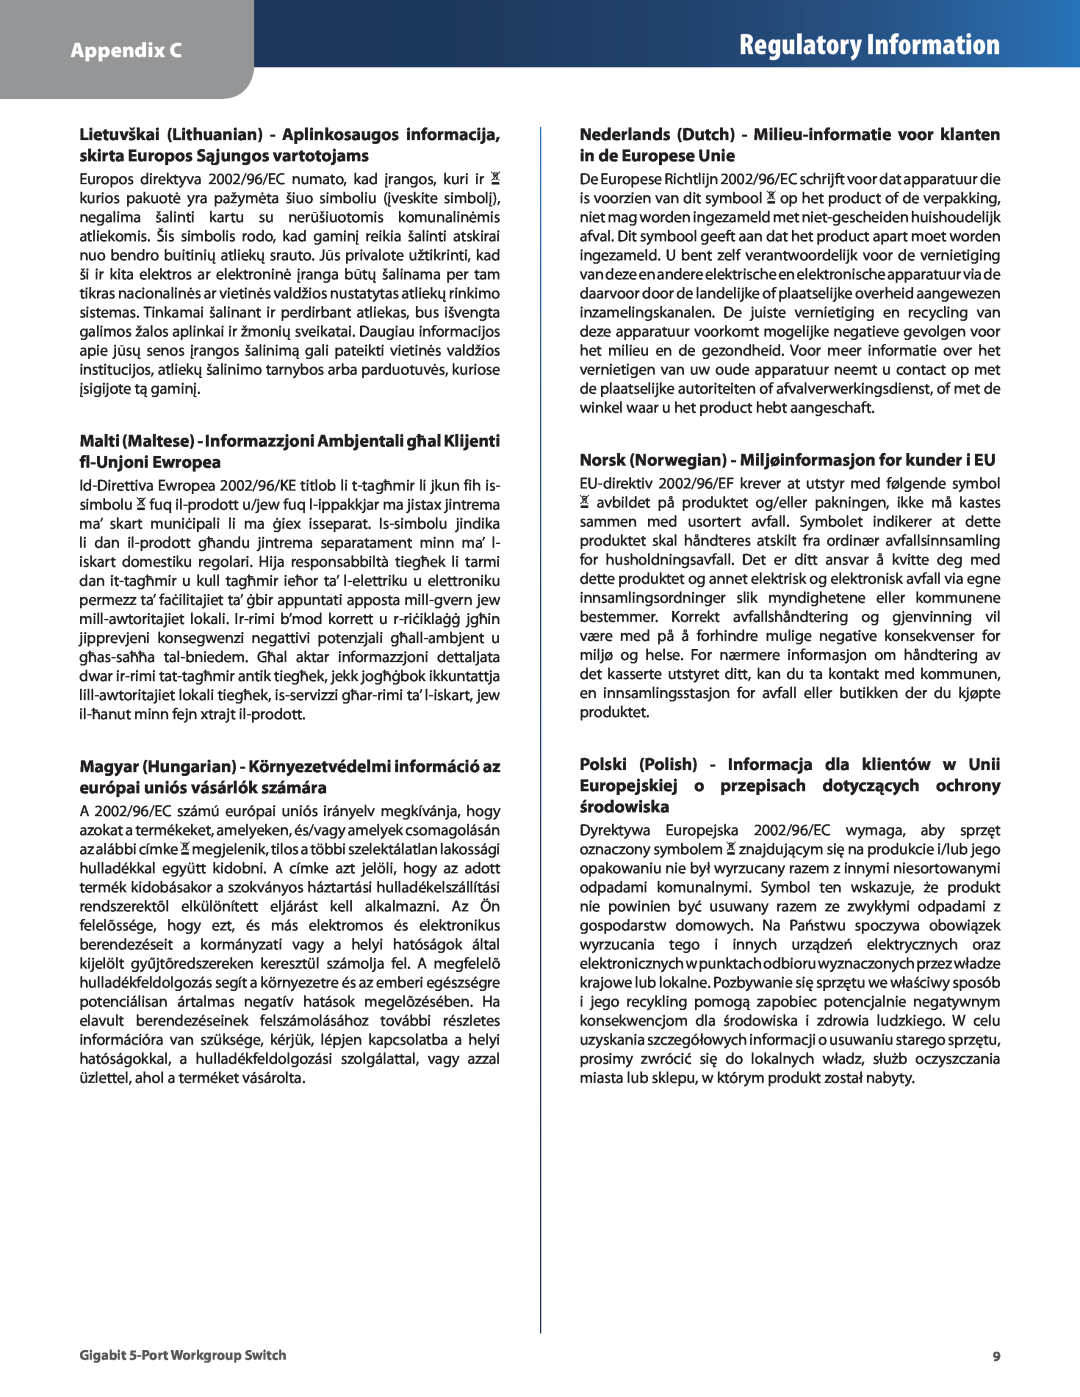 Cisco Systems EG005W manual Regulatory Information, Appendix C 